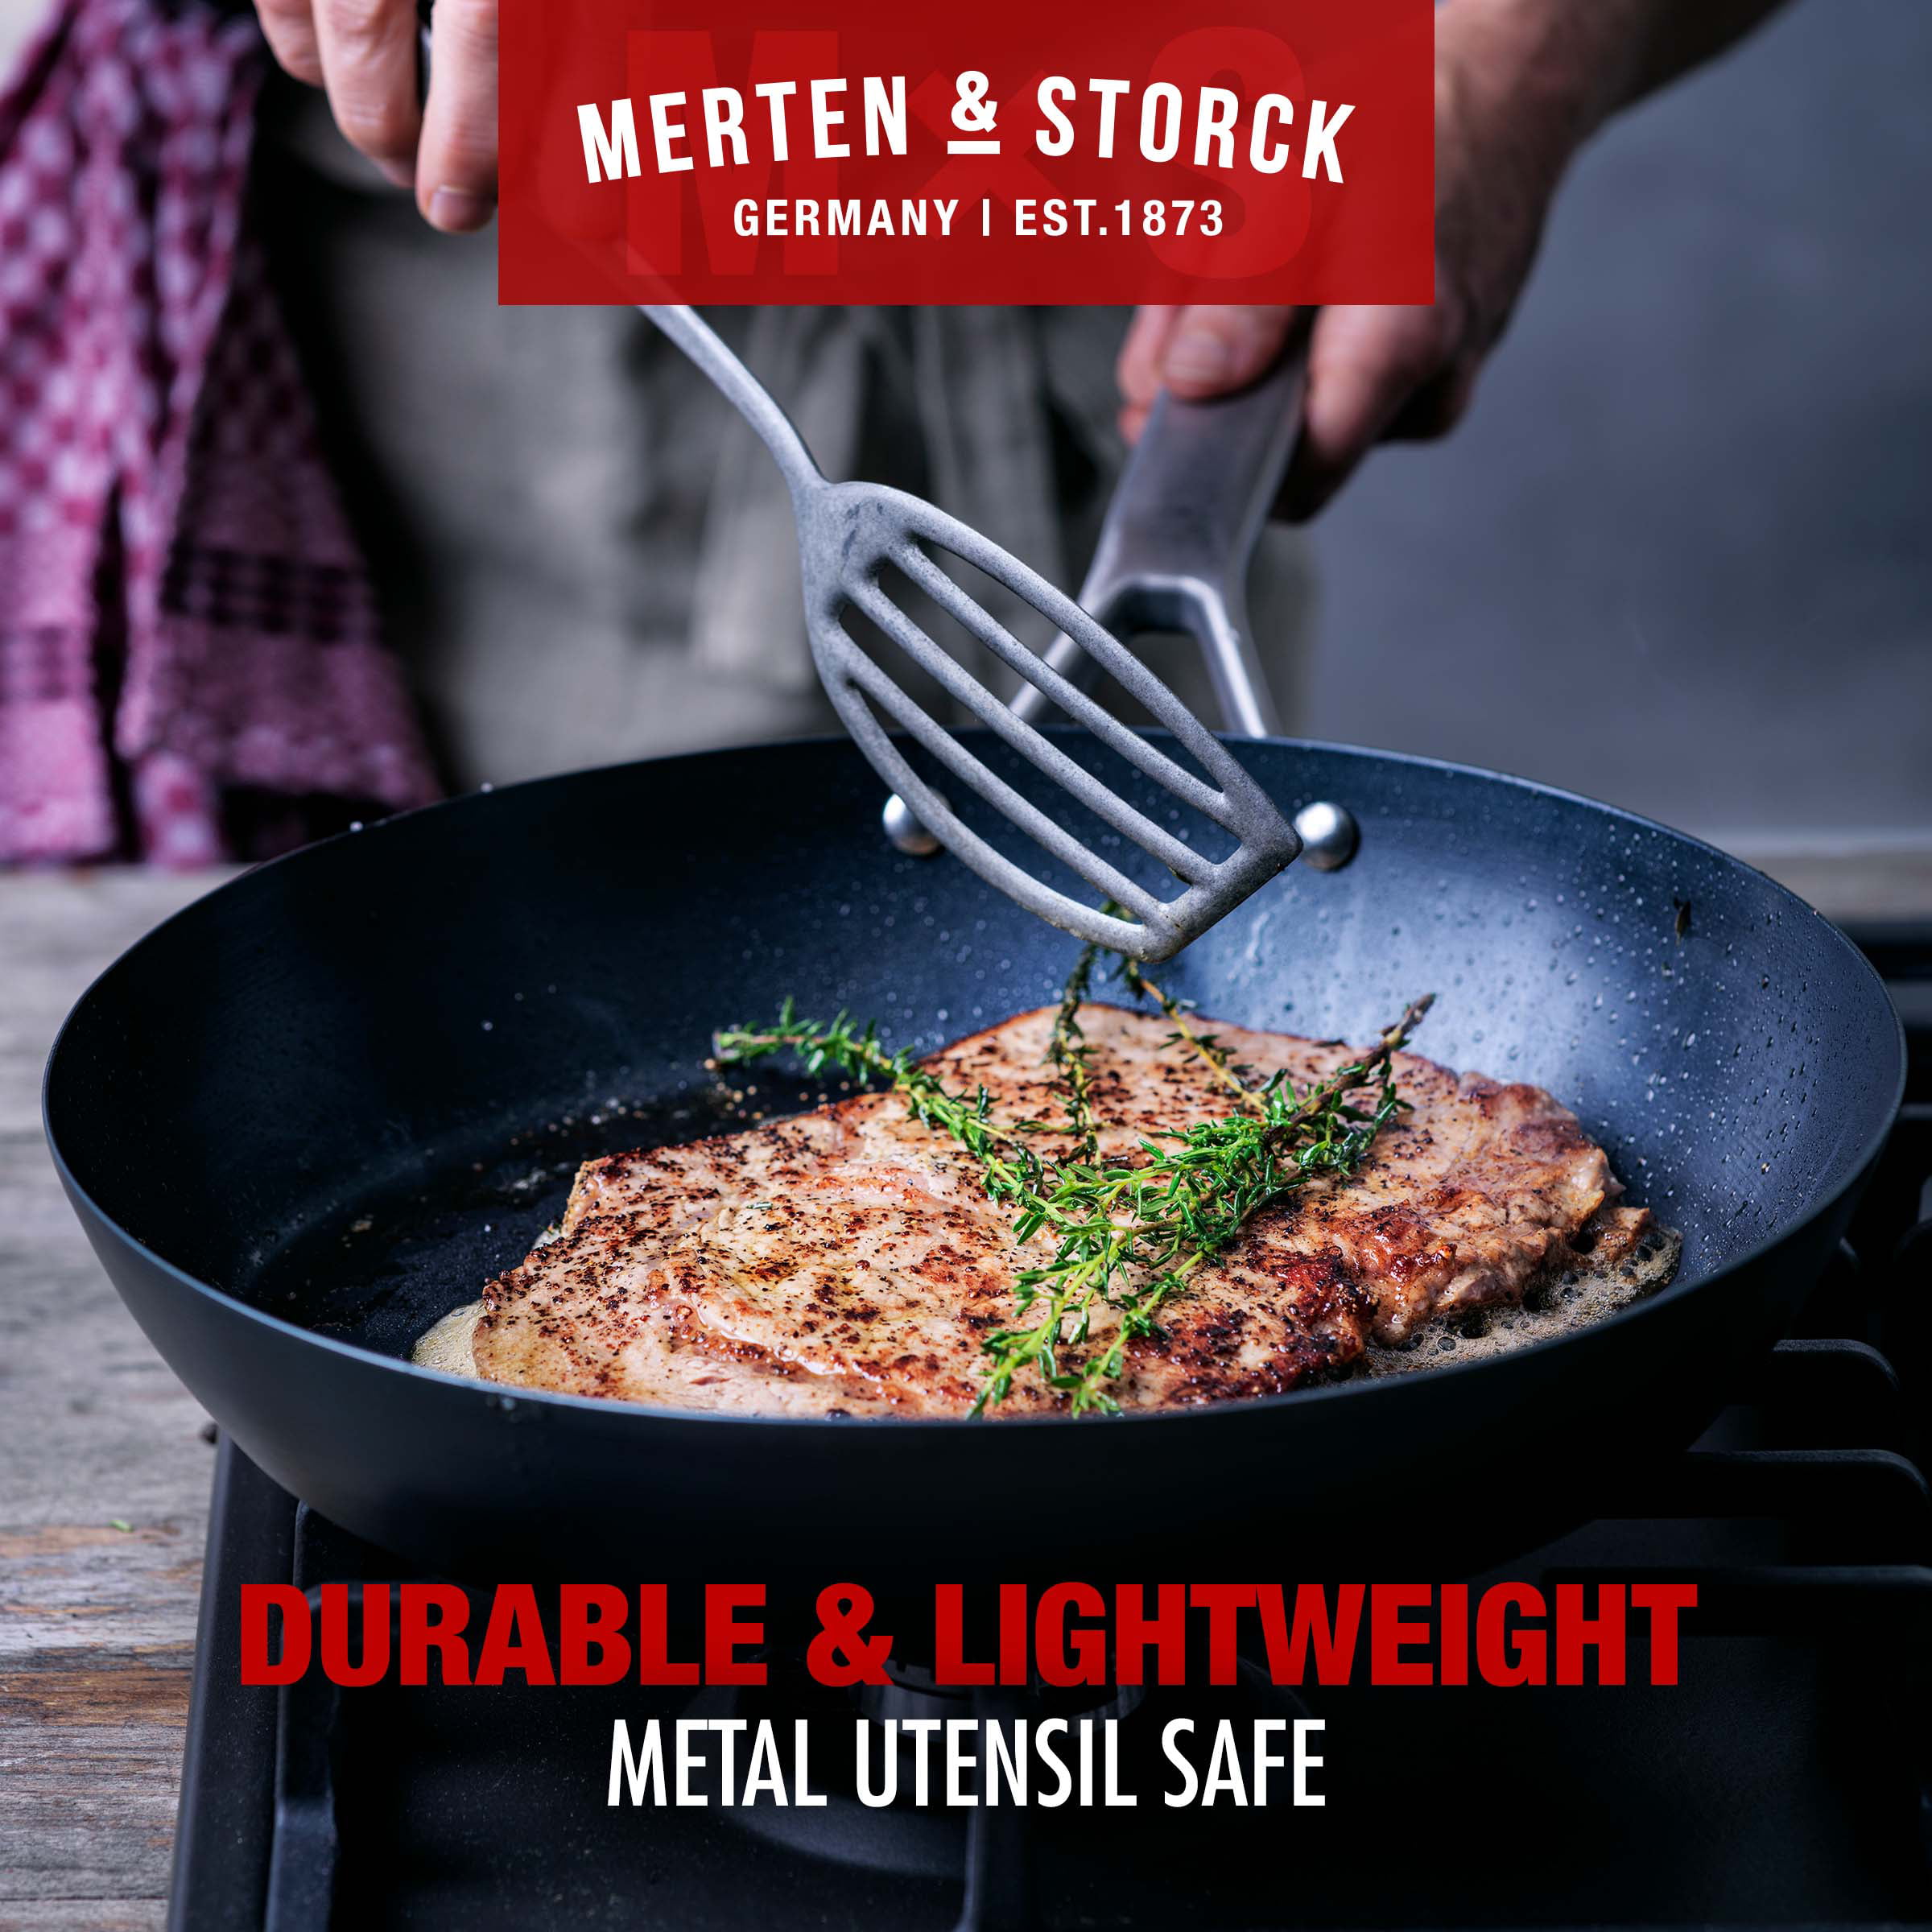  Merten & Storck European Crafted Steel Core Enameled Cookware,  9.5 Frying Pan Skillet, Induction, PFAS & PTFE Free, Dishwasher Safe, Oven  & Broiler Safe, Merlot Red: Home & Kitchen